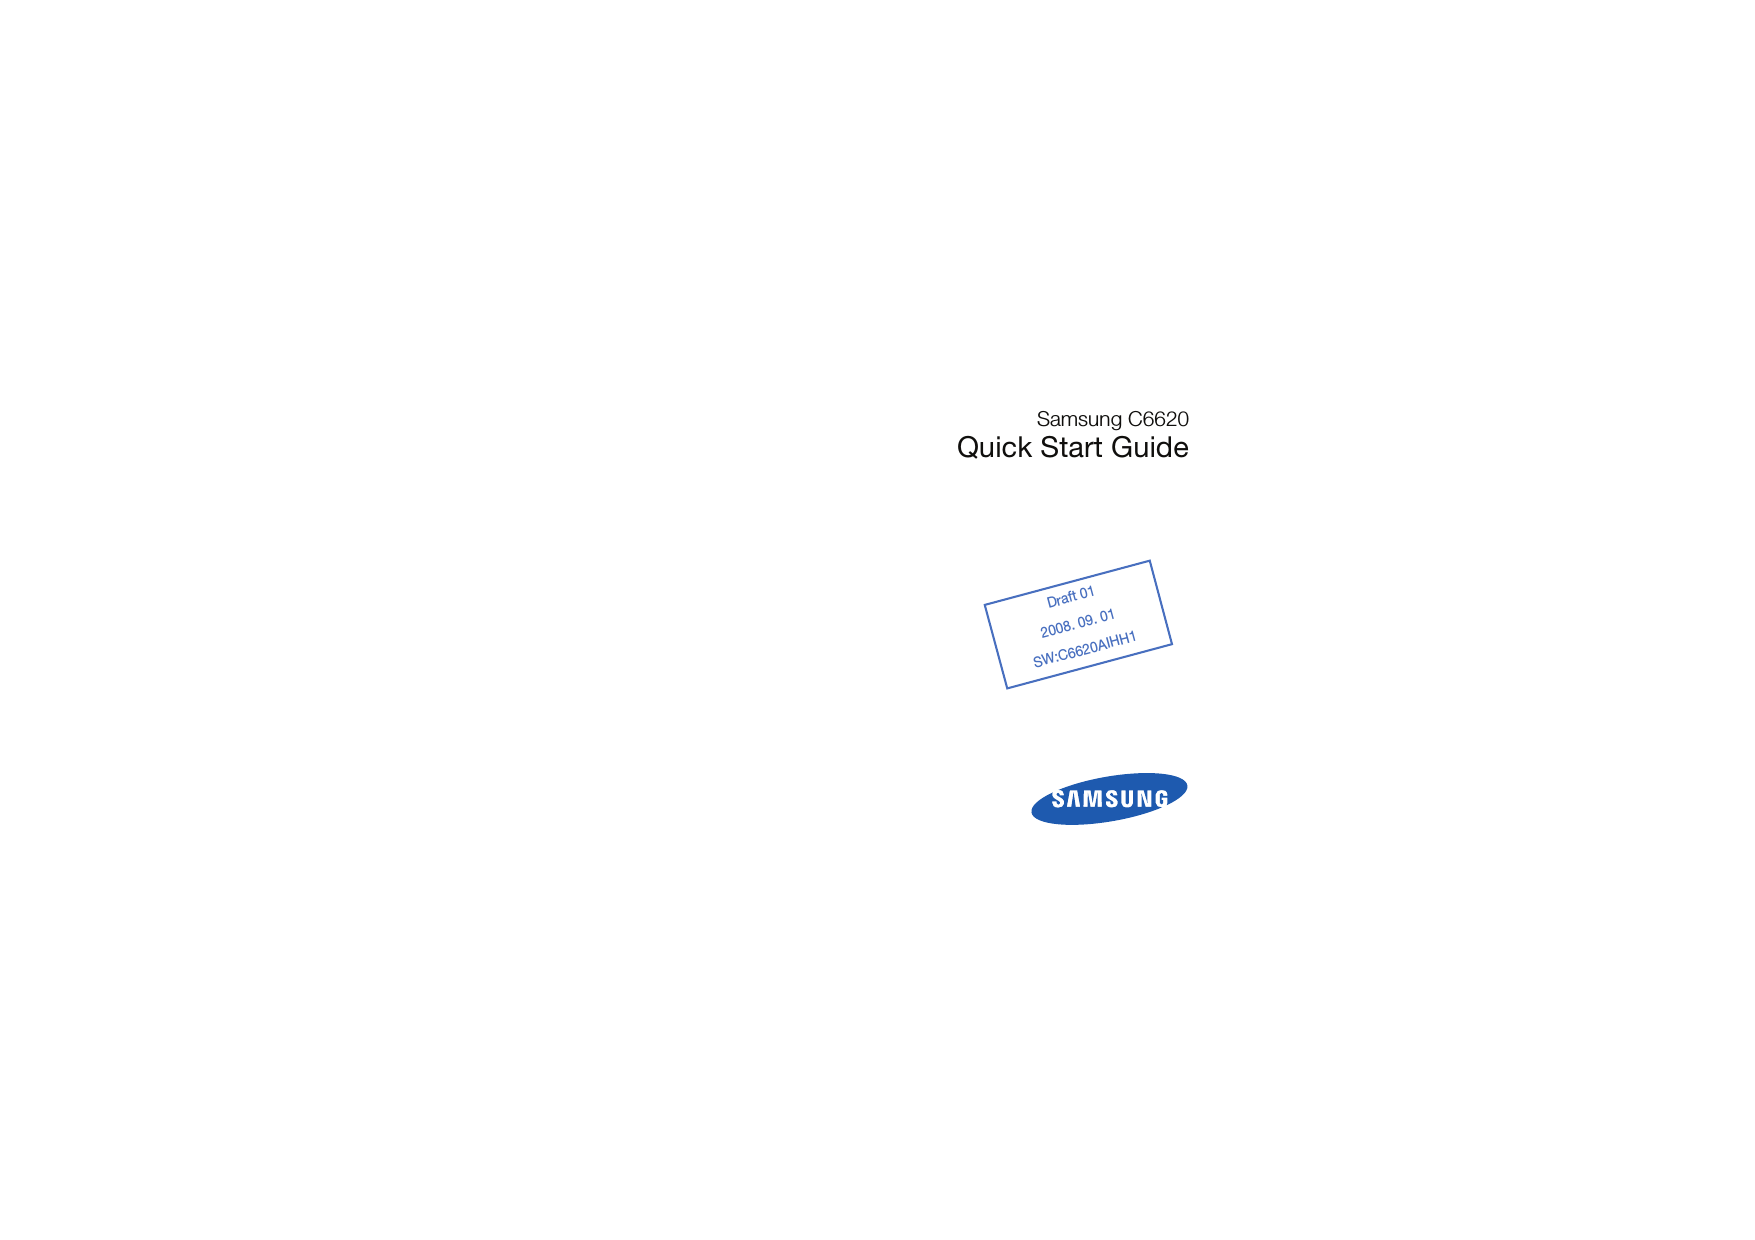 Samsung C6620Quick Start GuideDraft 012008. 09. 01SW:C6620AIHH1